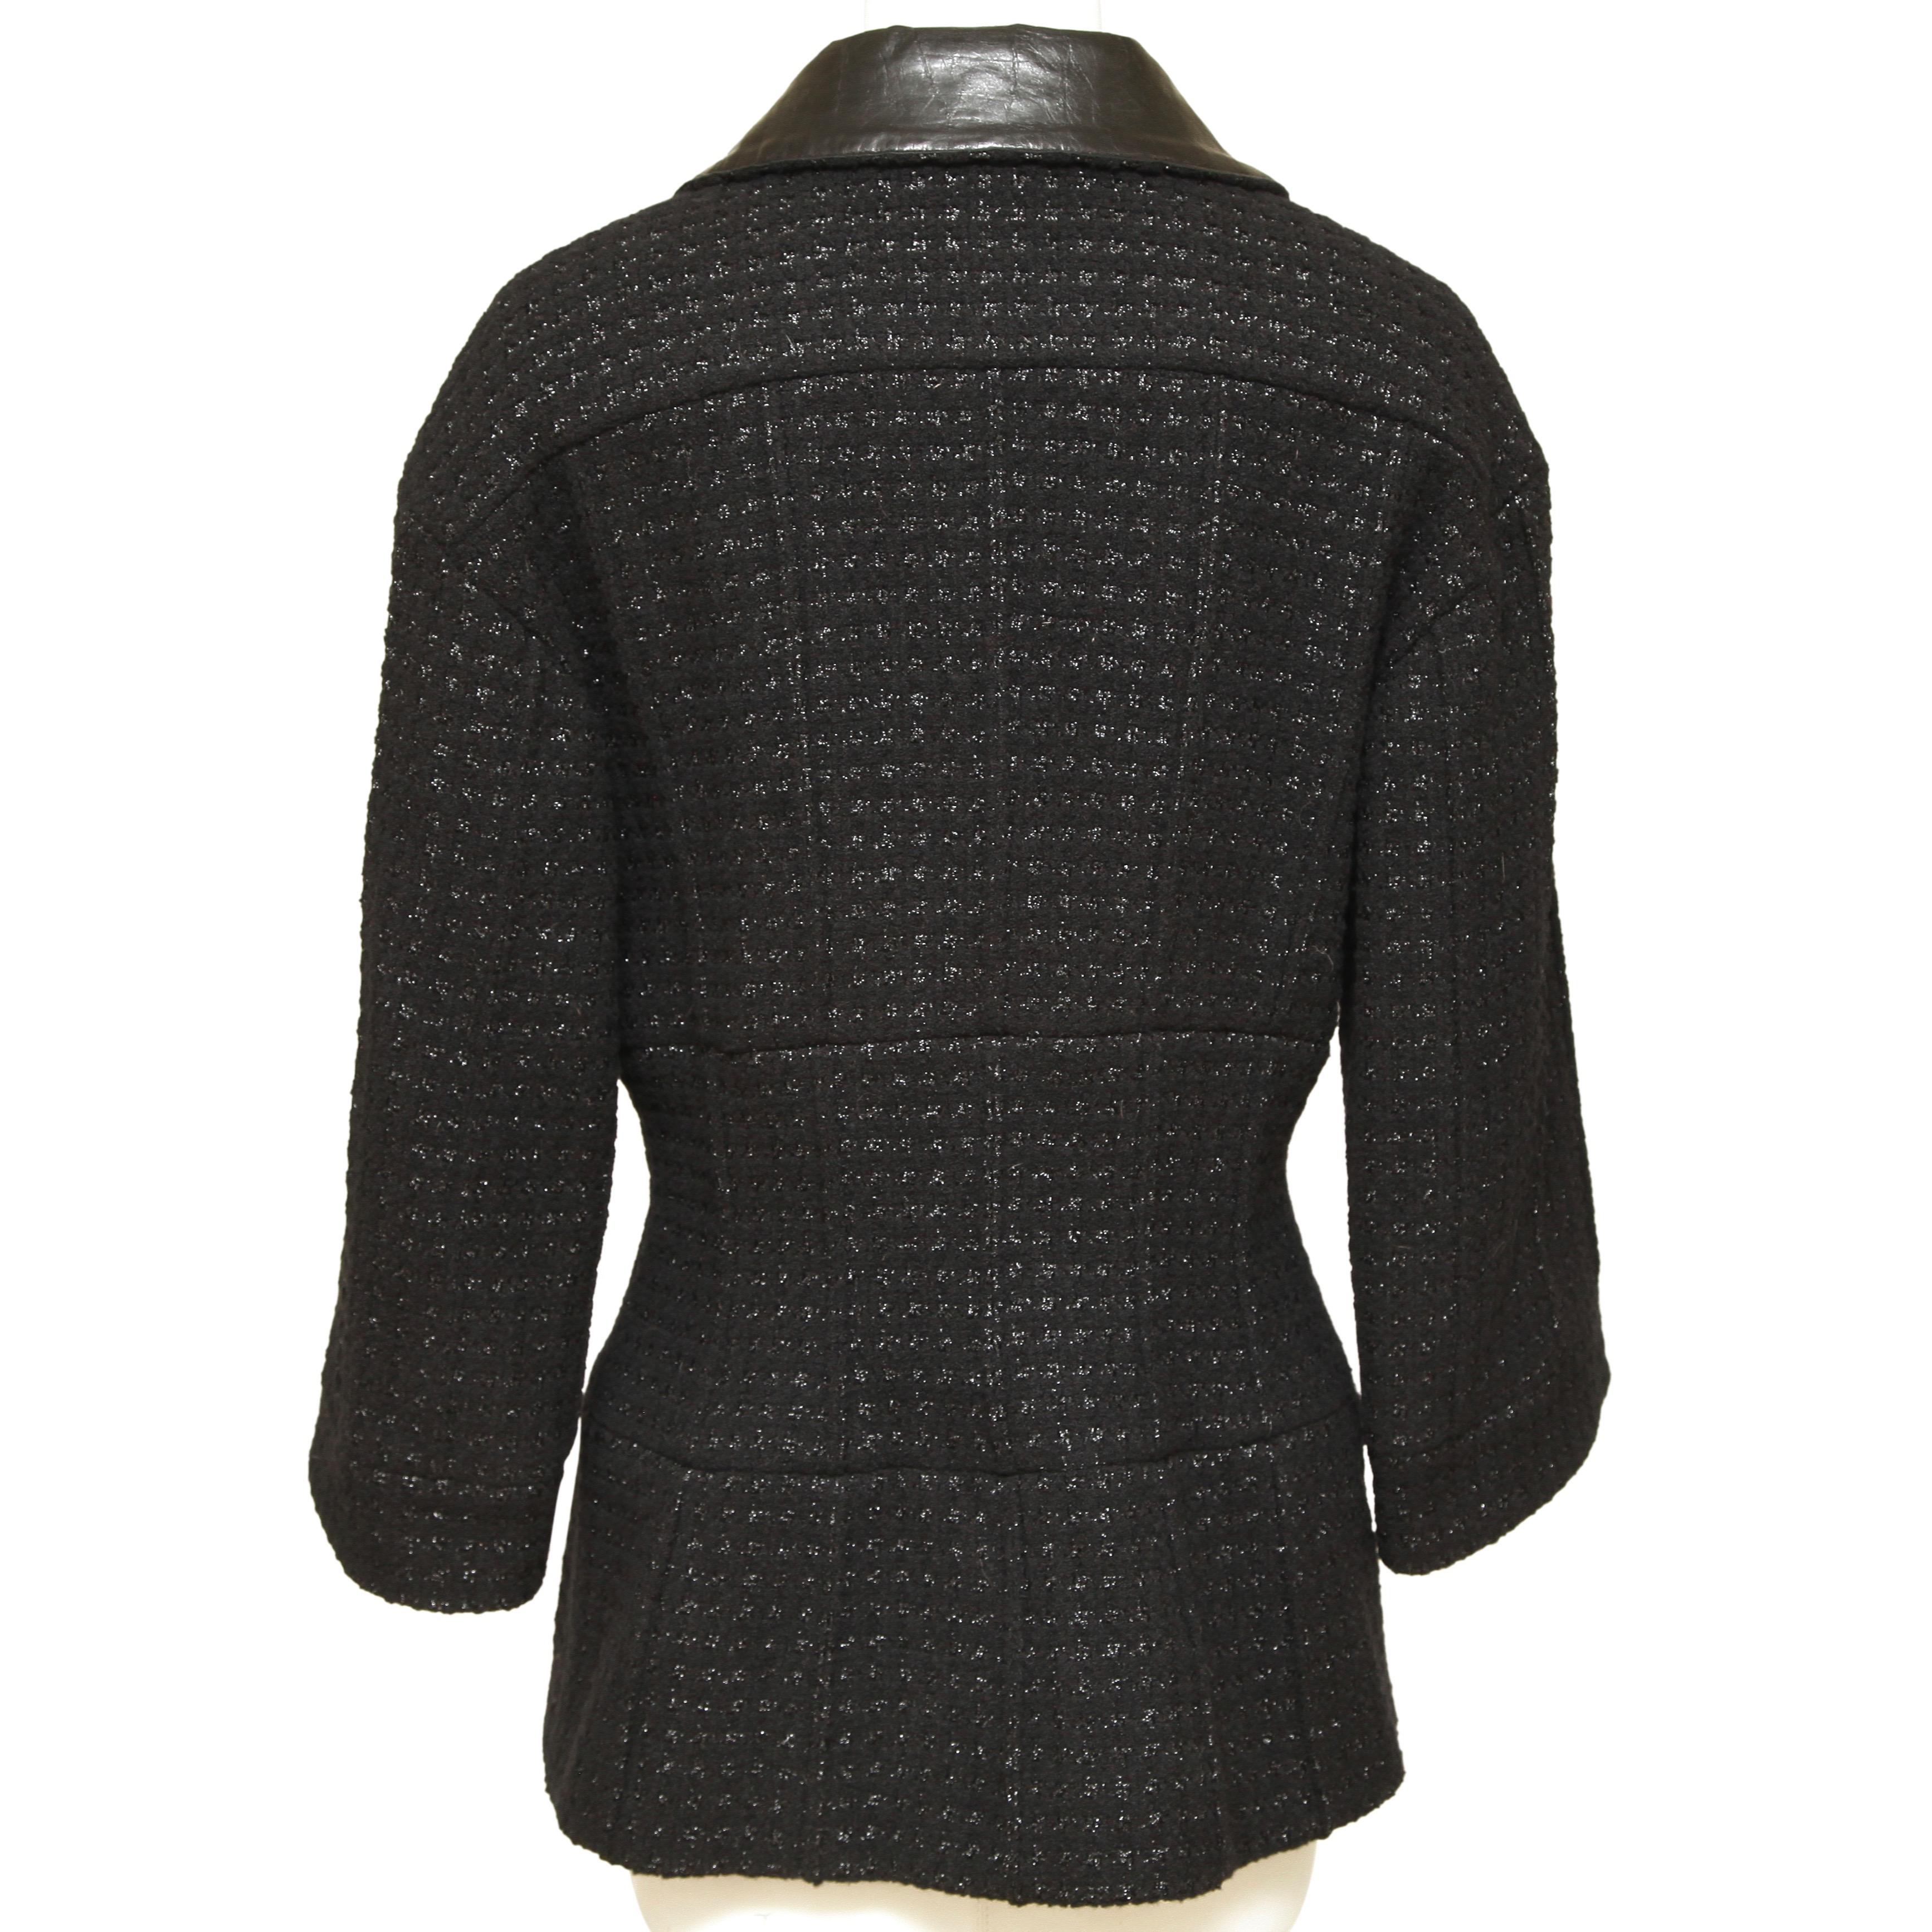 CHANEL Jacket Blazer Coat Tweed Black MetaIlic Leather Silver Chain Sz 42 2014 C For Sale 1